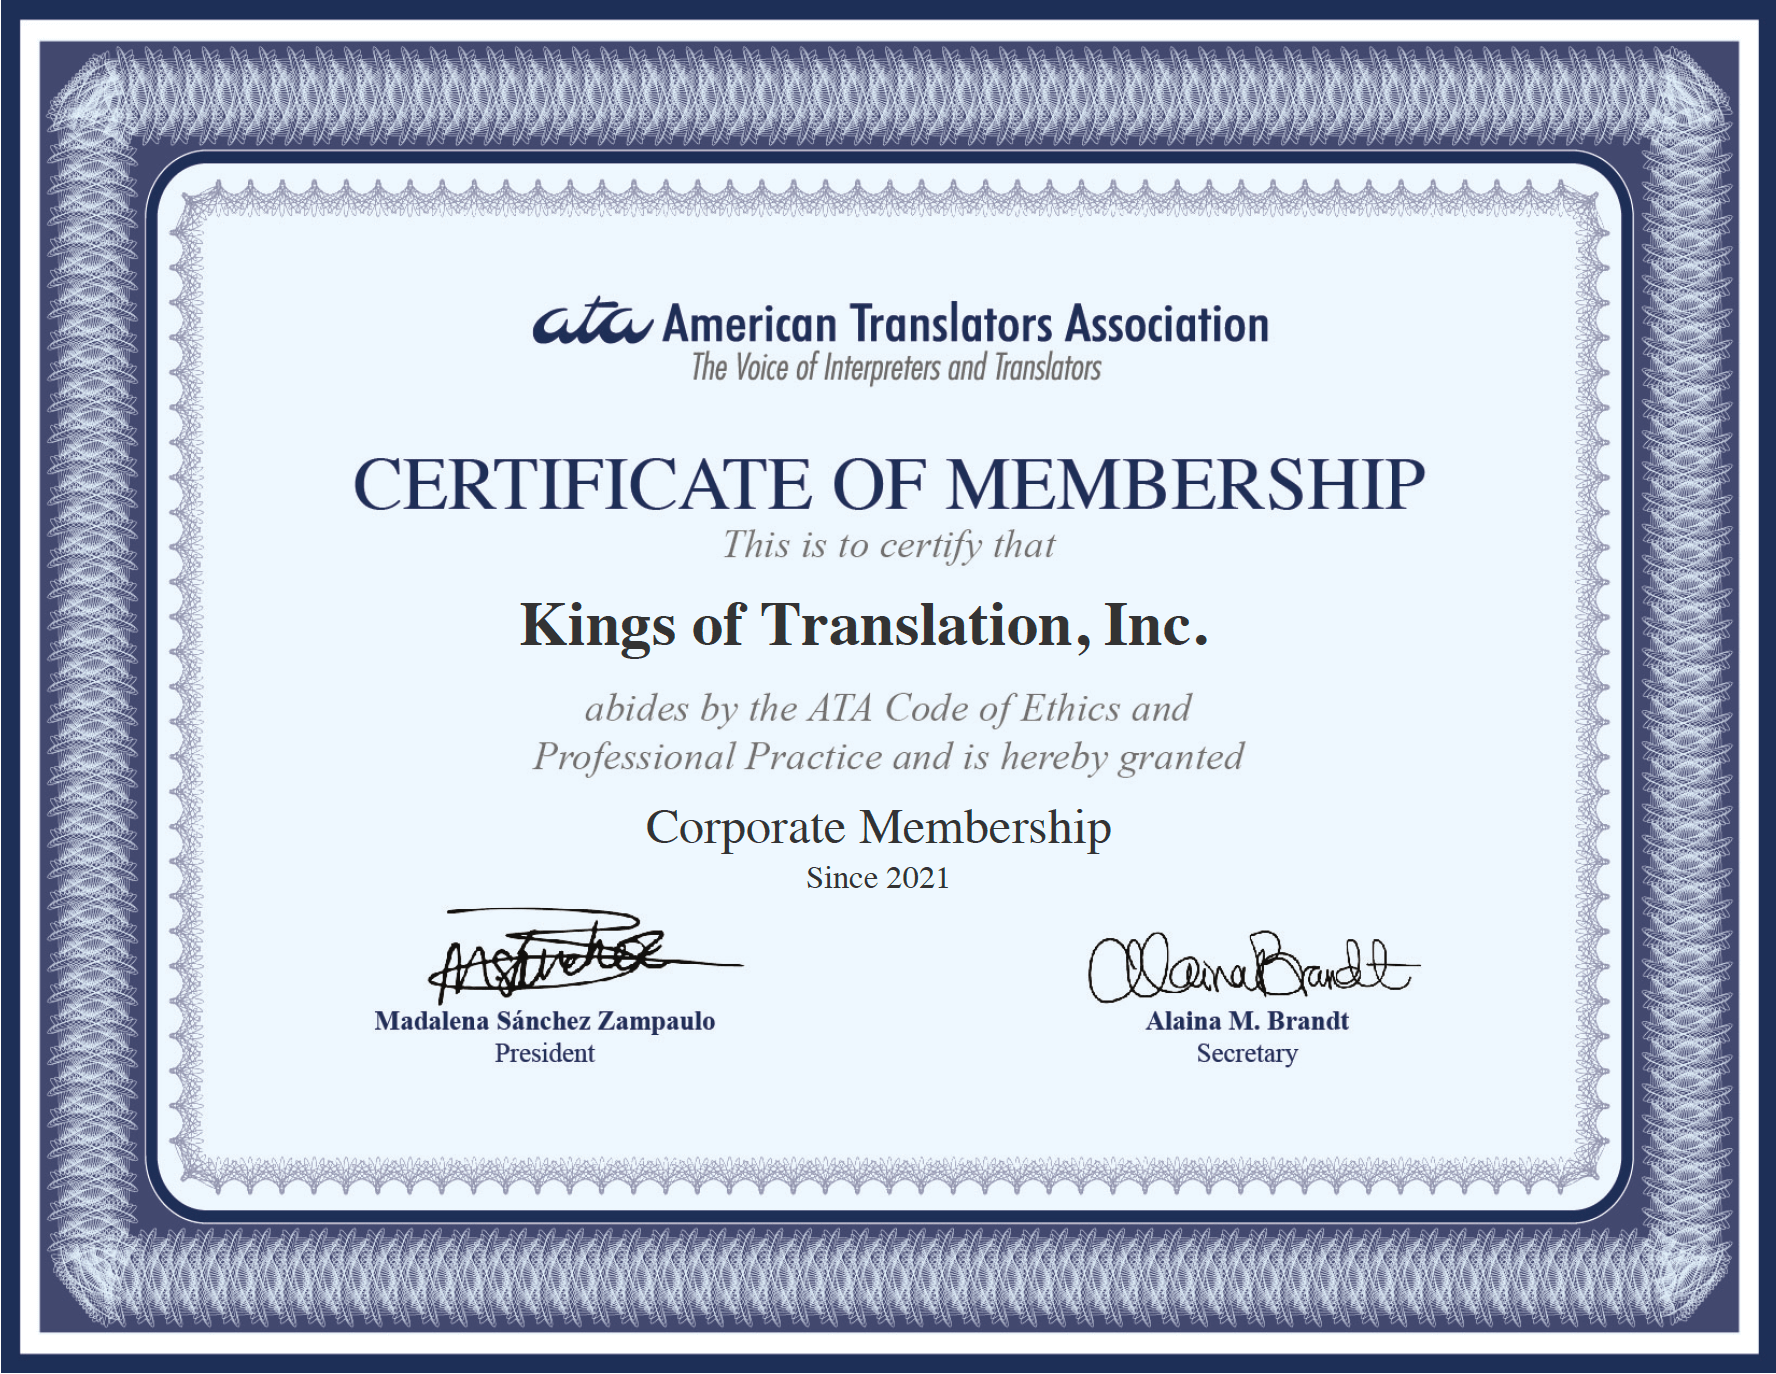 Kings of Translation - an official ATA member